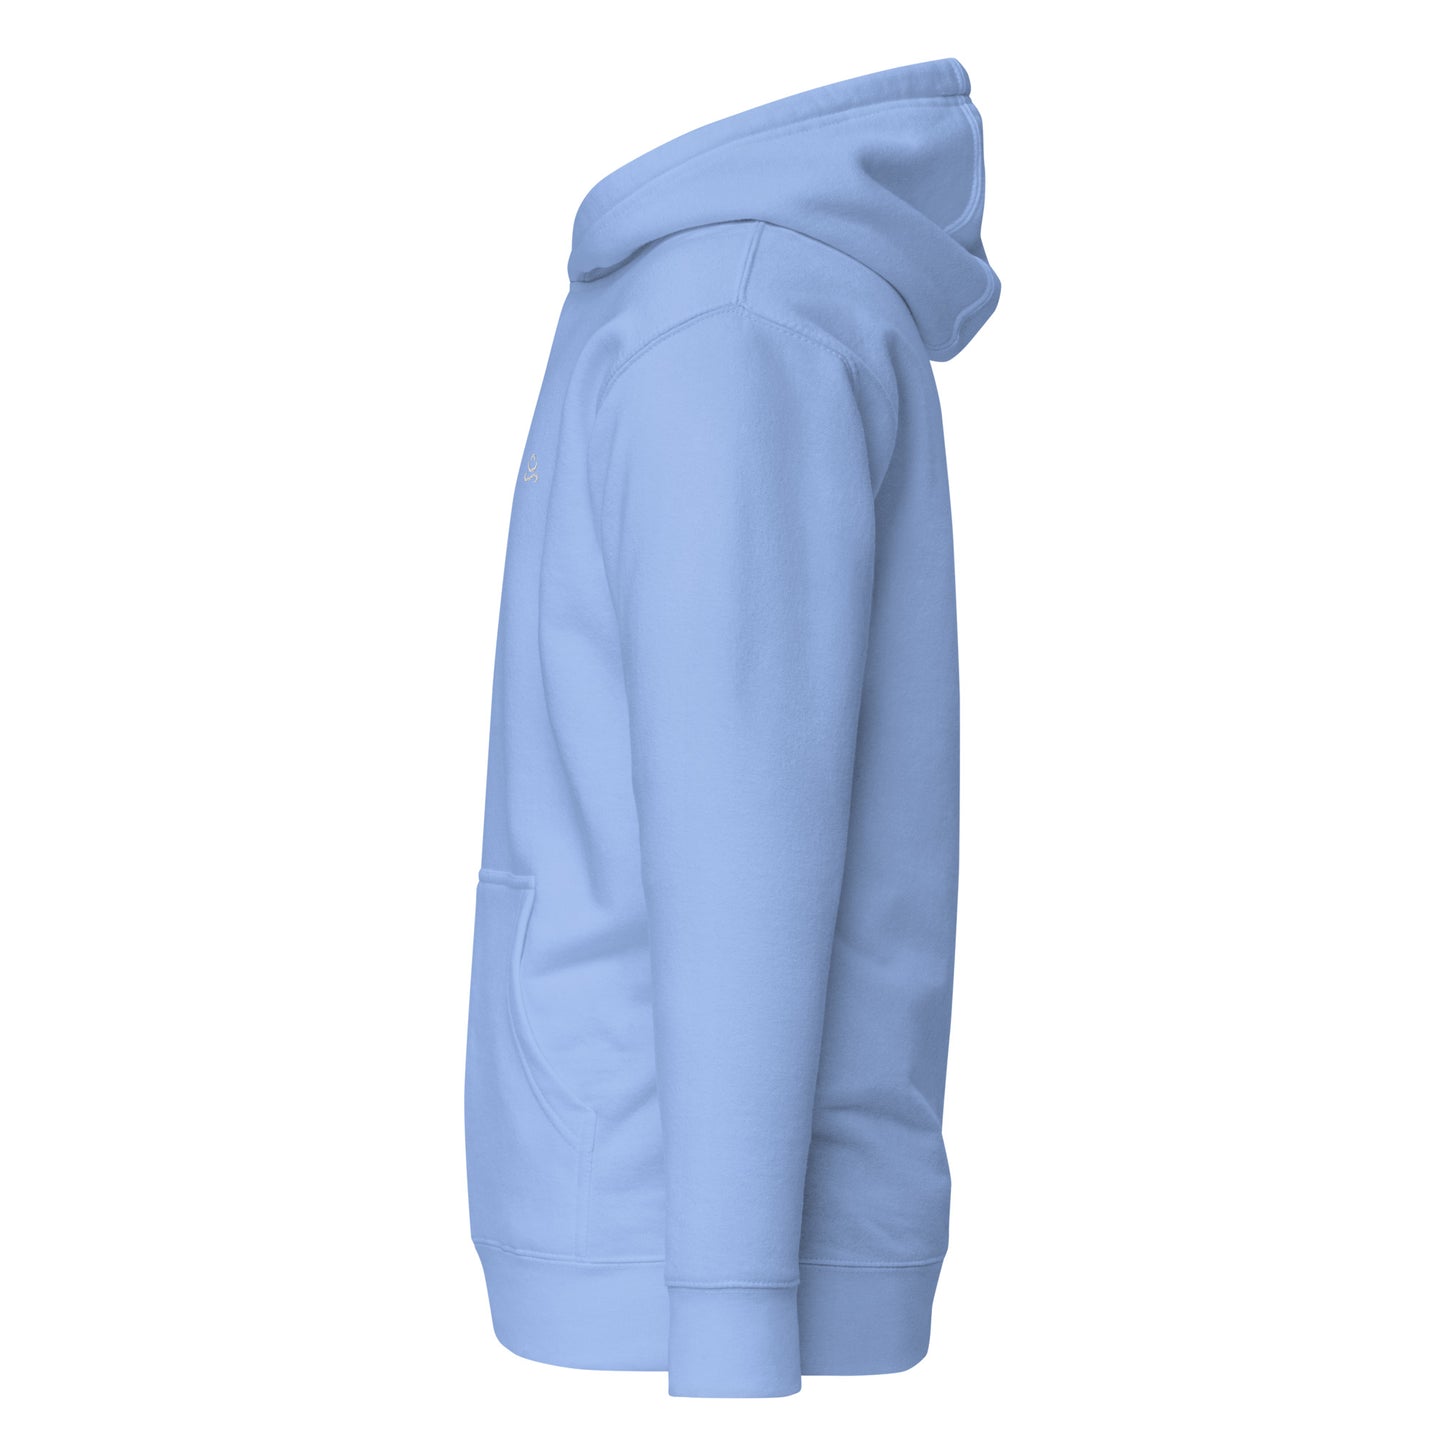 Carolina Blue Women's Cotton Hoodie by Women's Cotton Hoodie sold by Jain Yoga